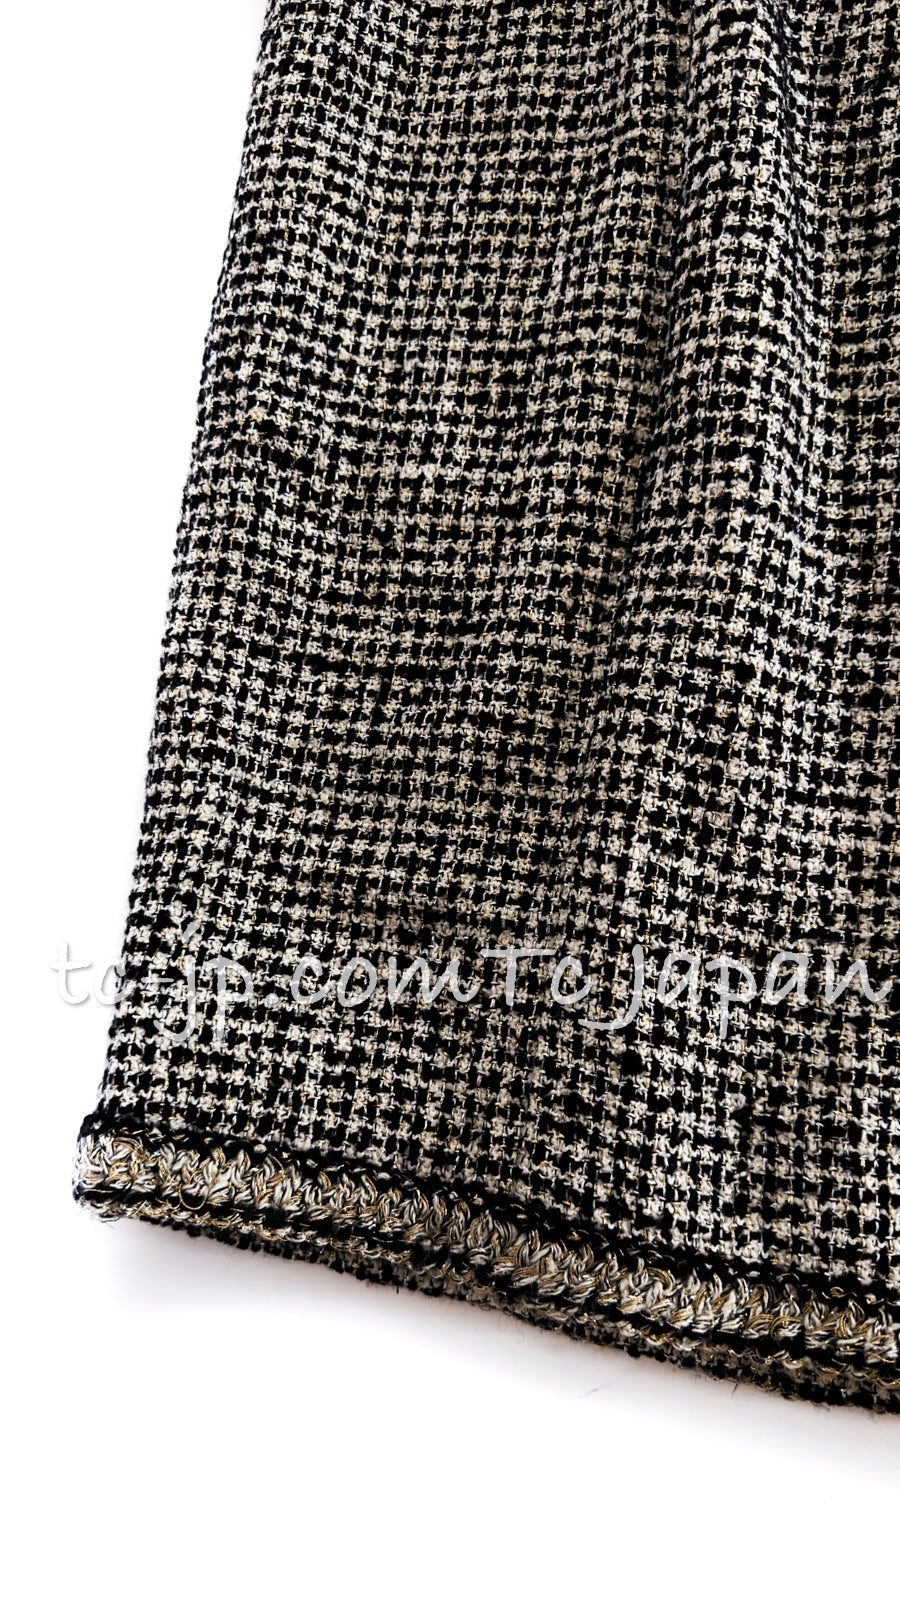 CHANEL 10C Black Ivory Stand Collar Tweed Jacket Skirt 40 シャネル スタンドカラー・ツイード・ジャケット・スカート